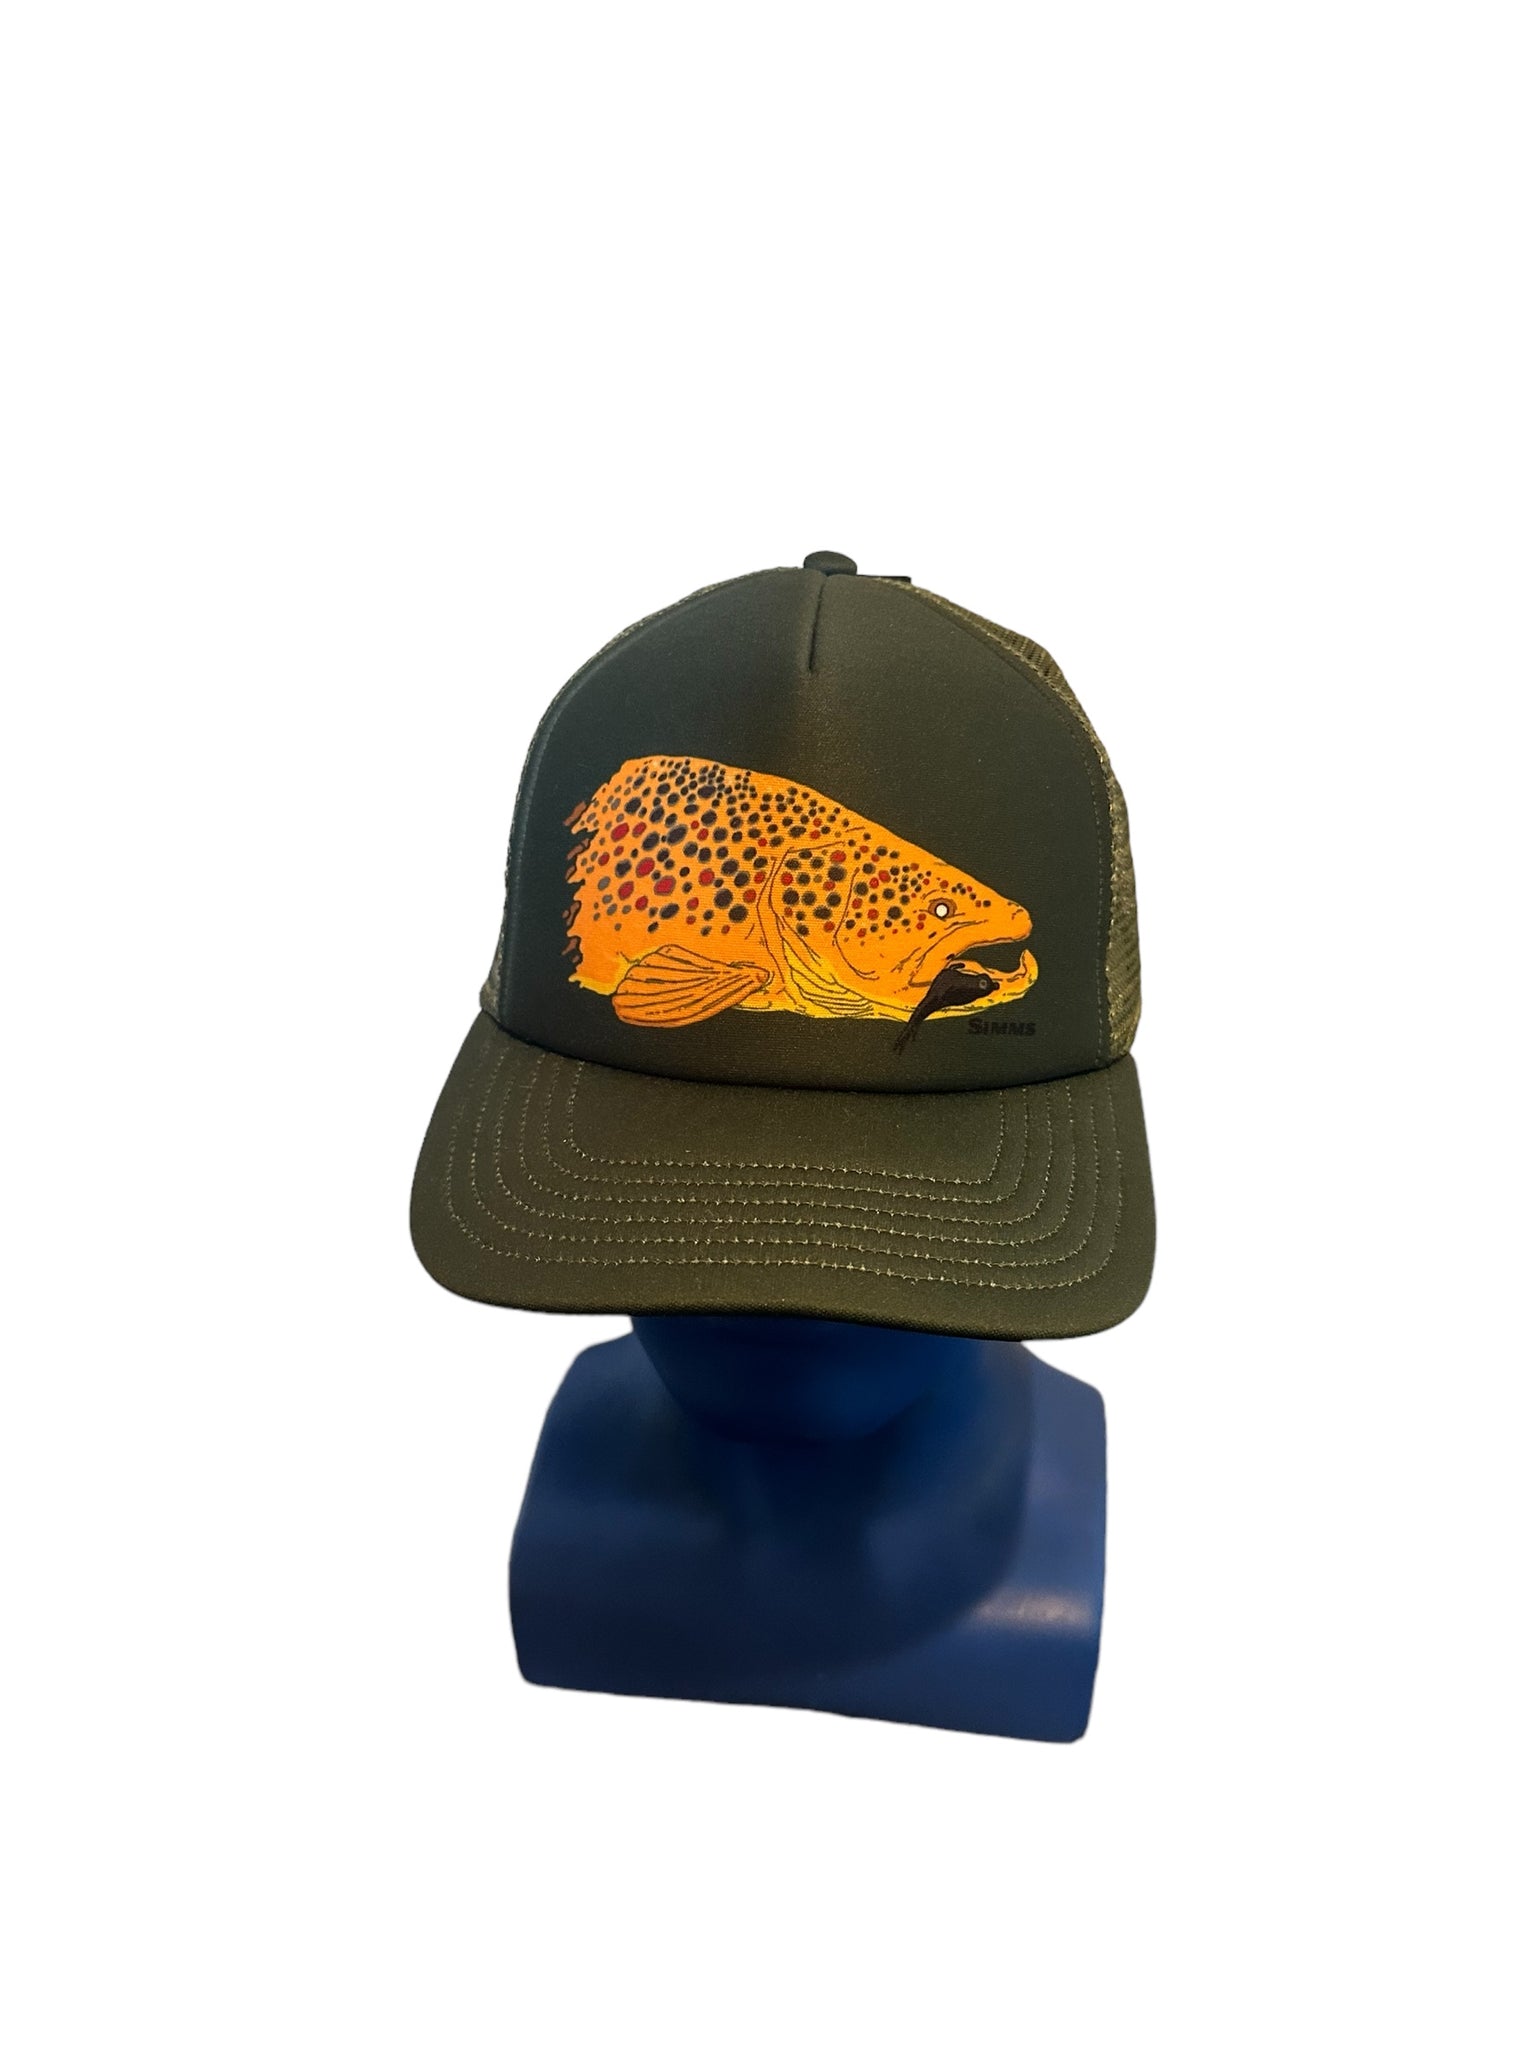 Simms Fishing Products Kype Jaw Mesh Foam High Crown Trucker Hat Cap